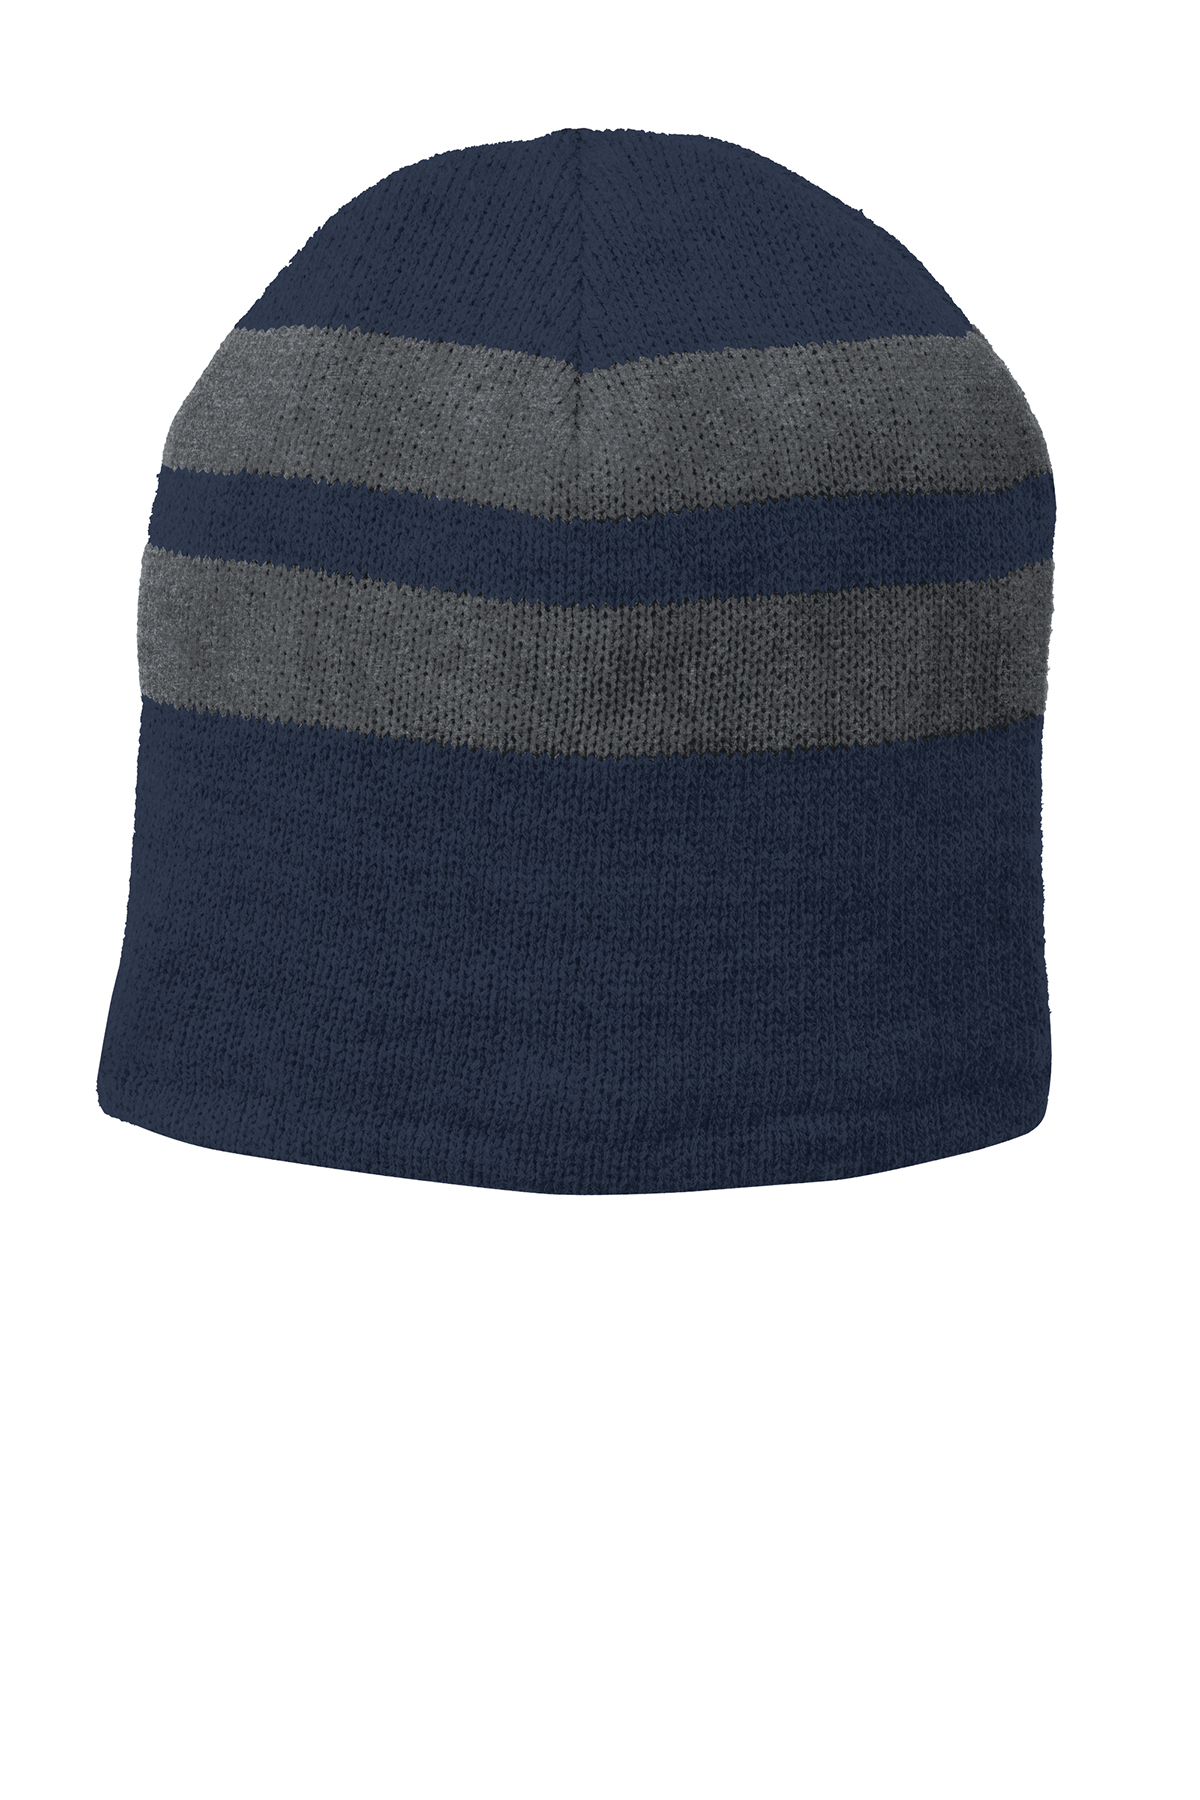 Port & Beanie Cap Striped | | Company Company Fleece-Lined Port Product &